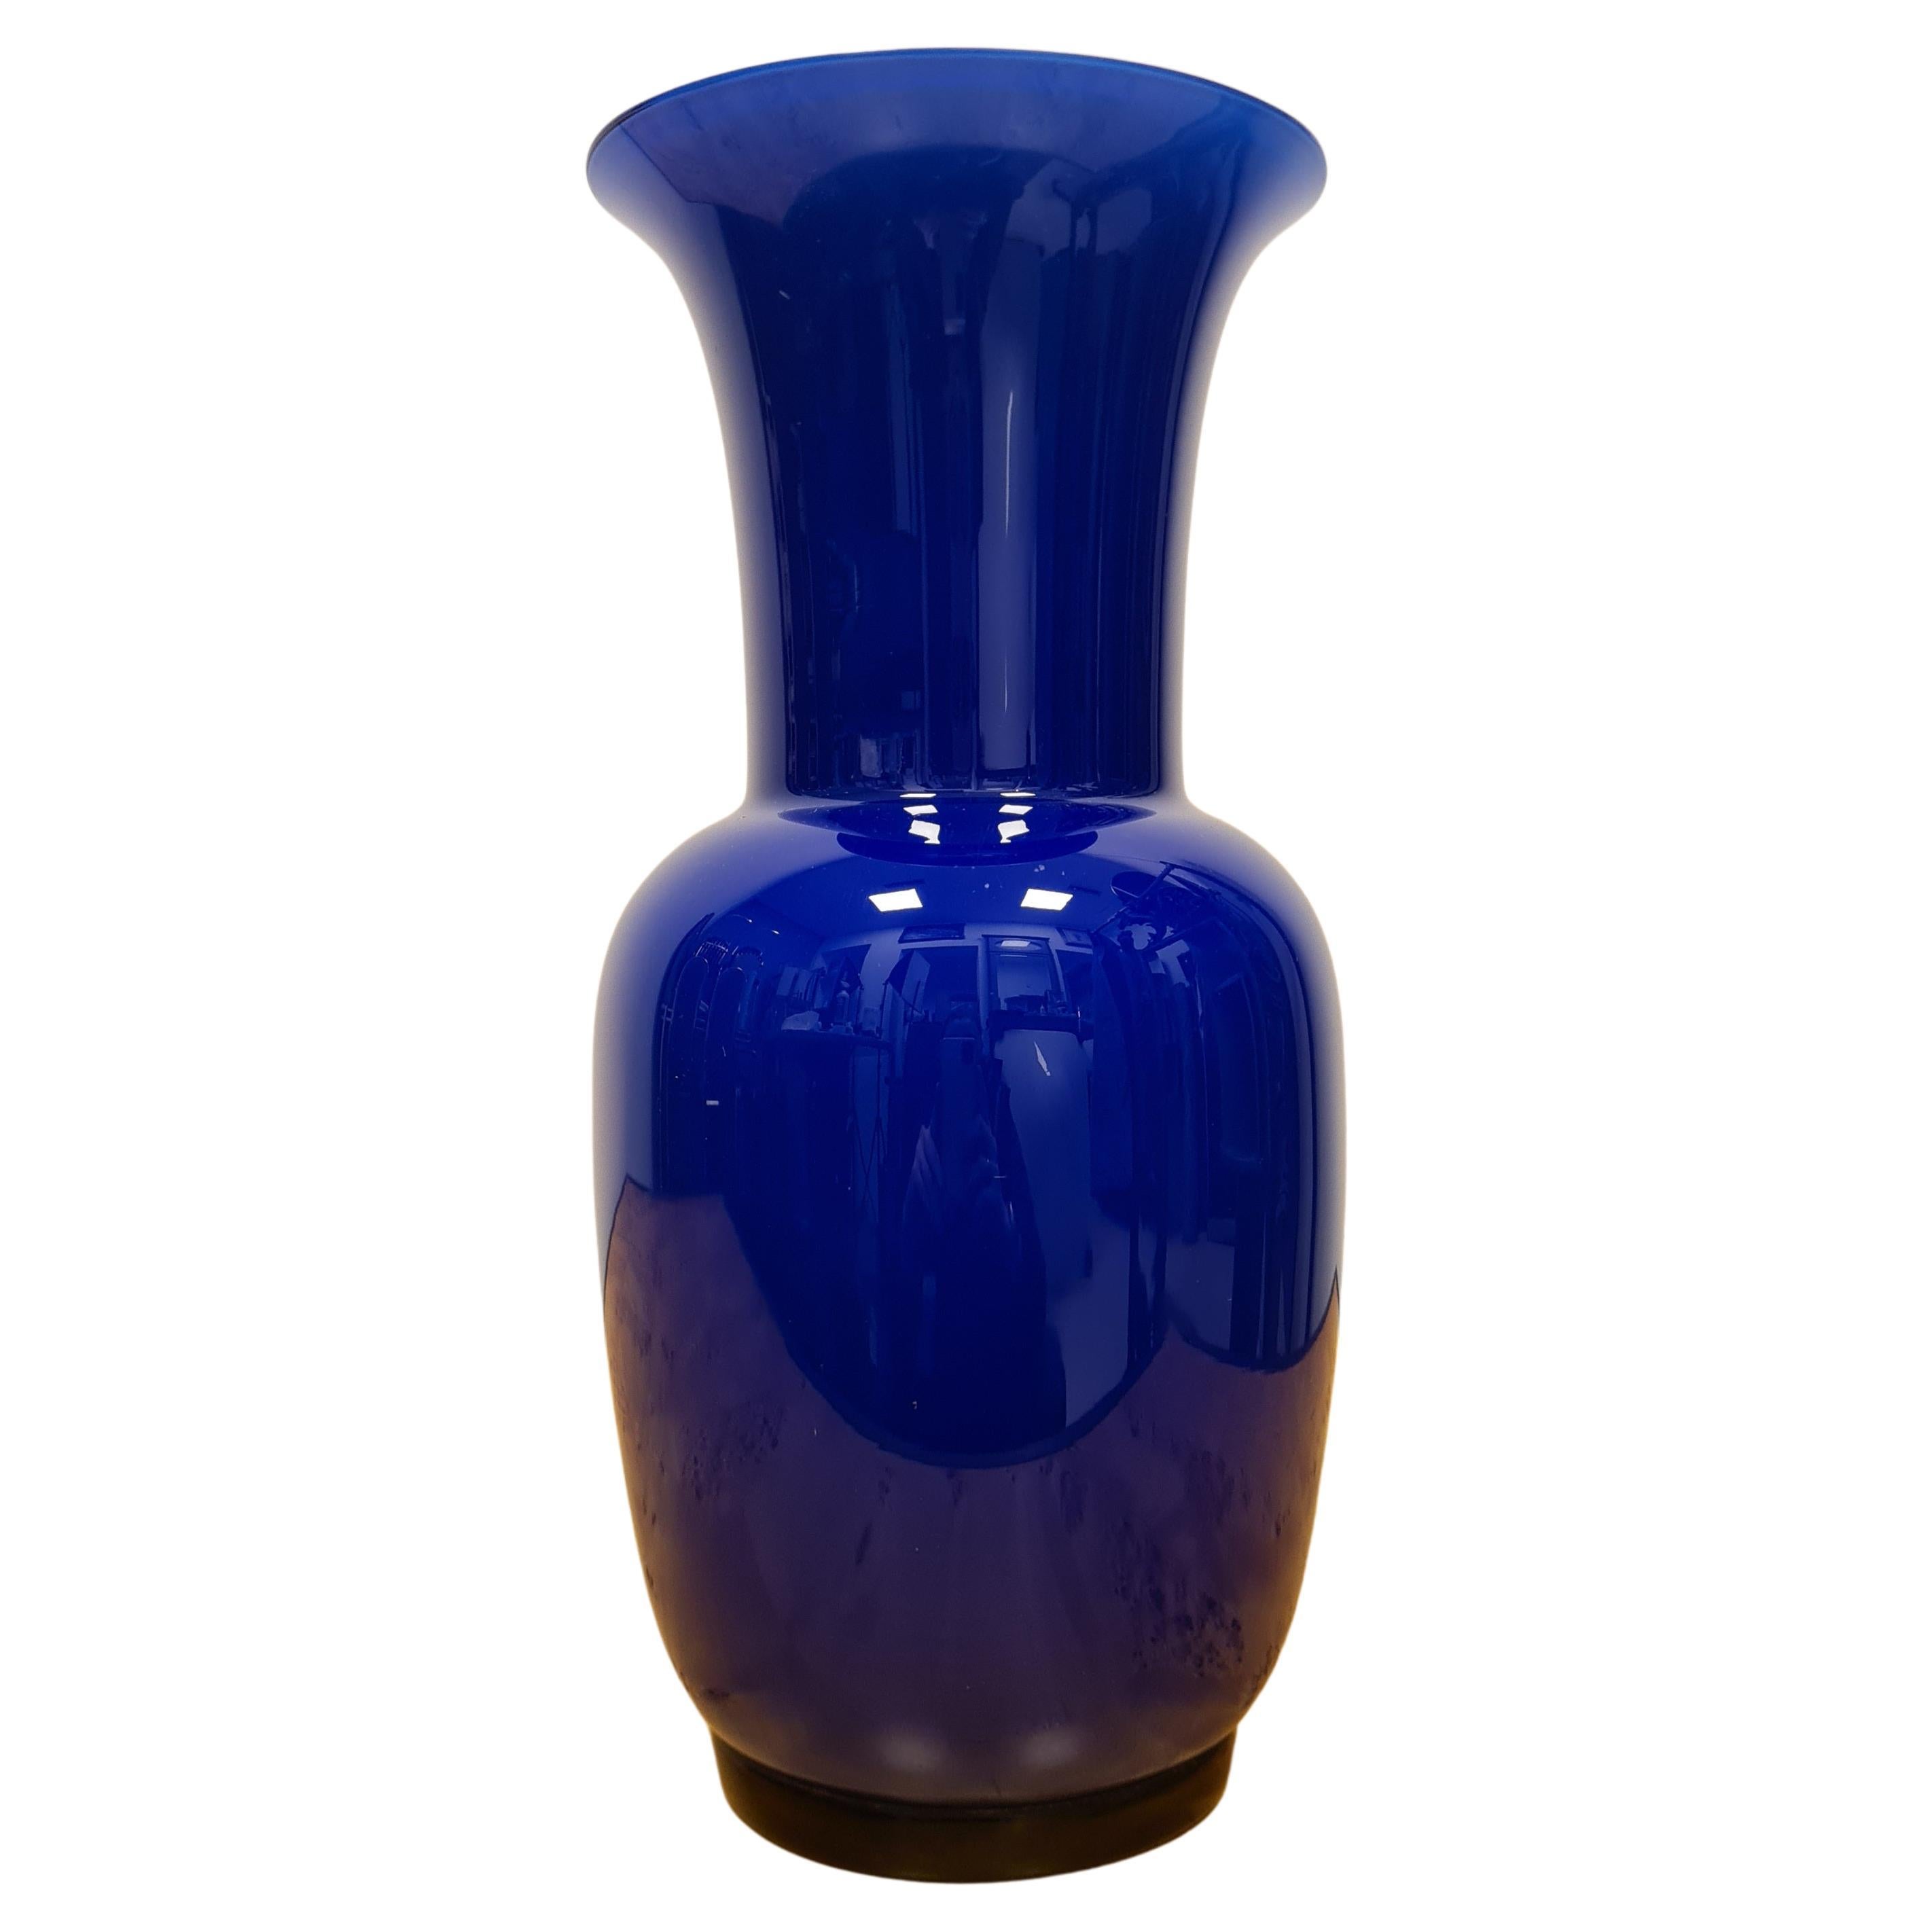 Opaline and Sapphire-colored glass vase by Paolo Venini for Venini